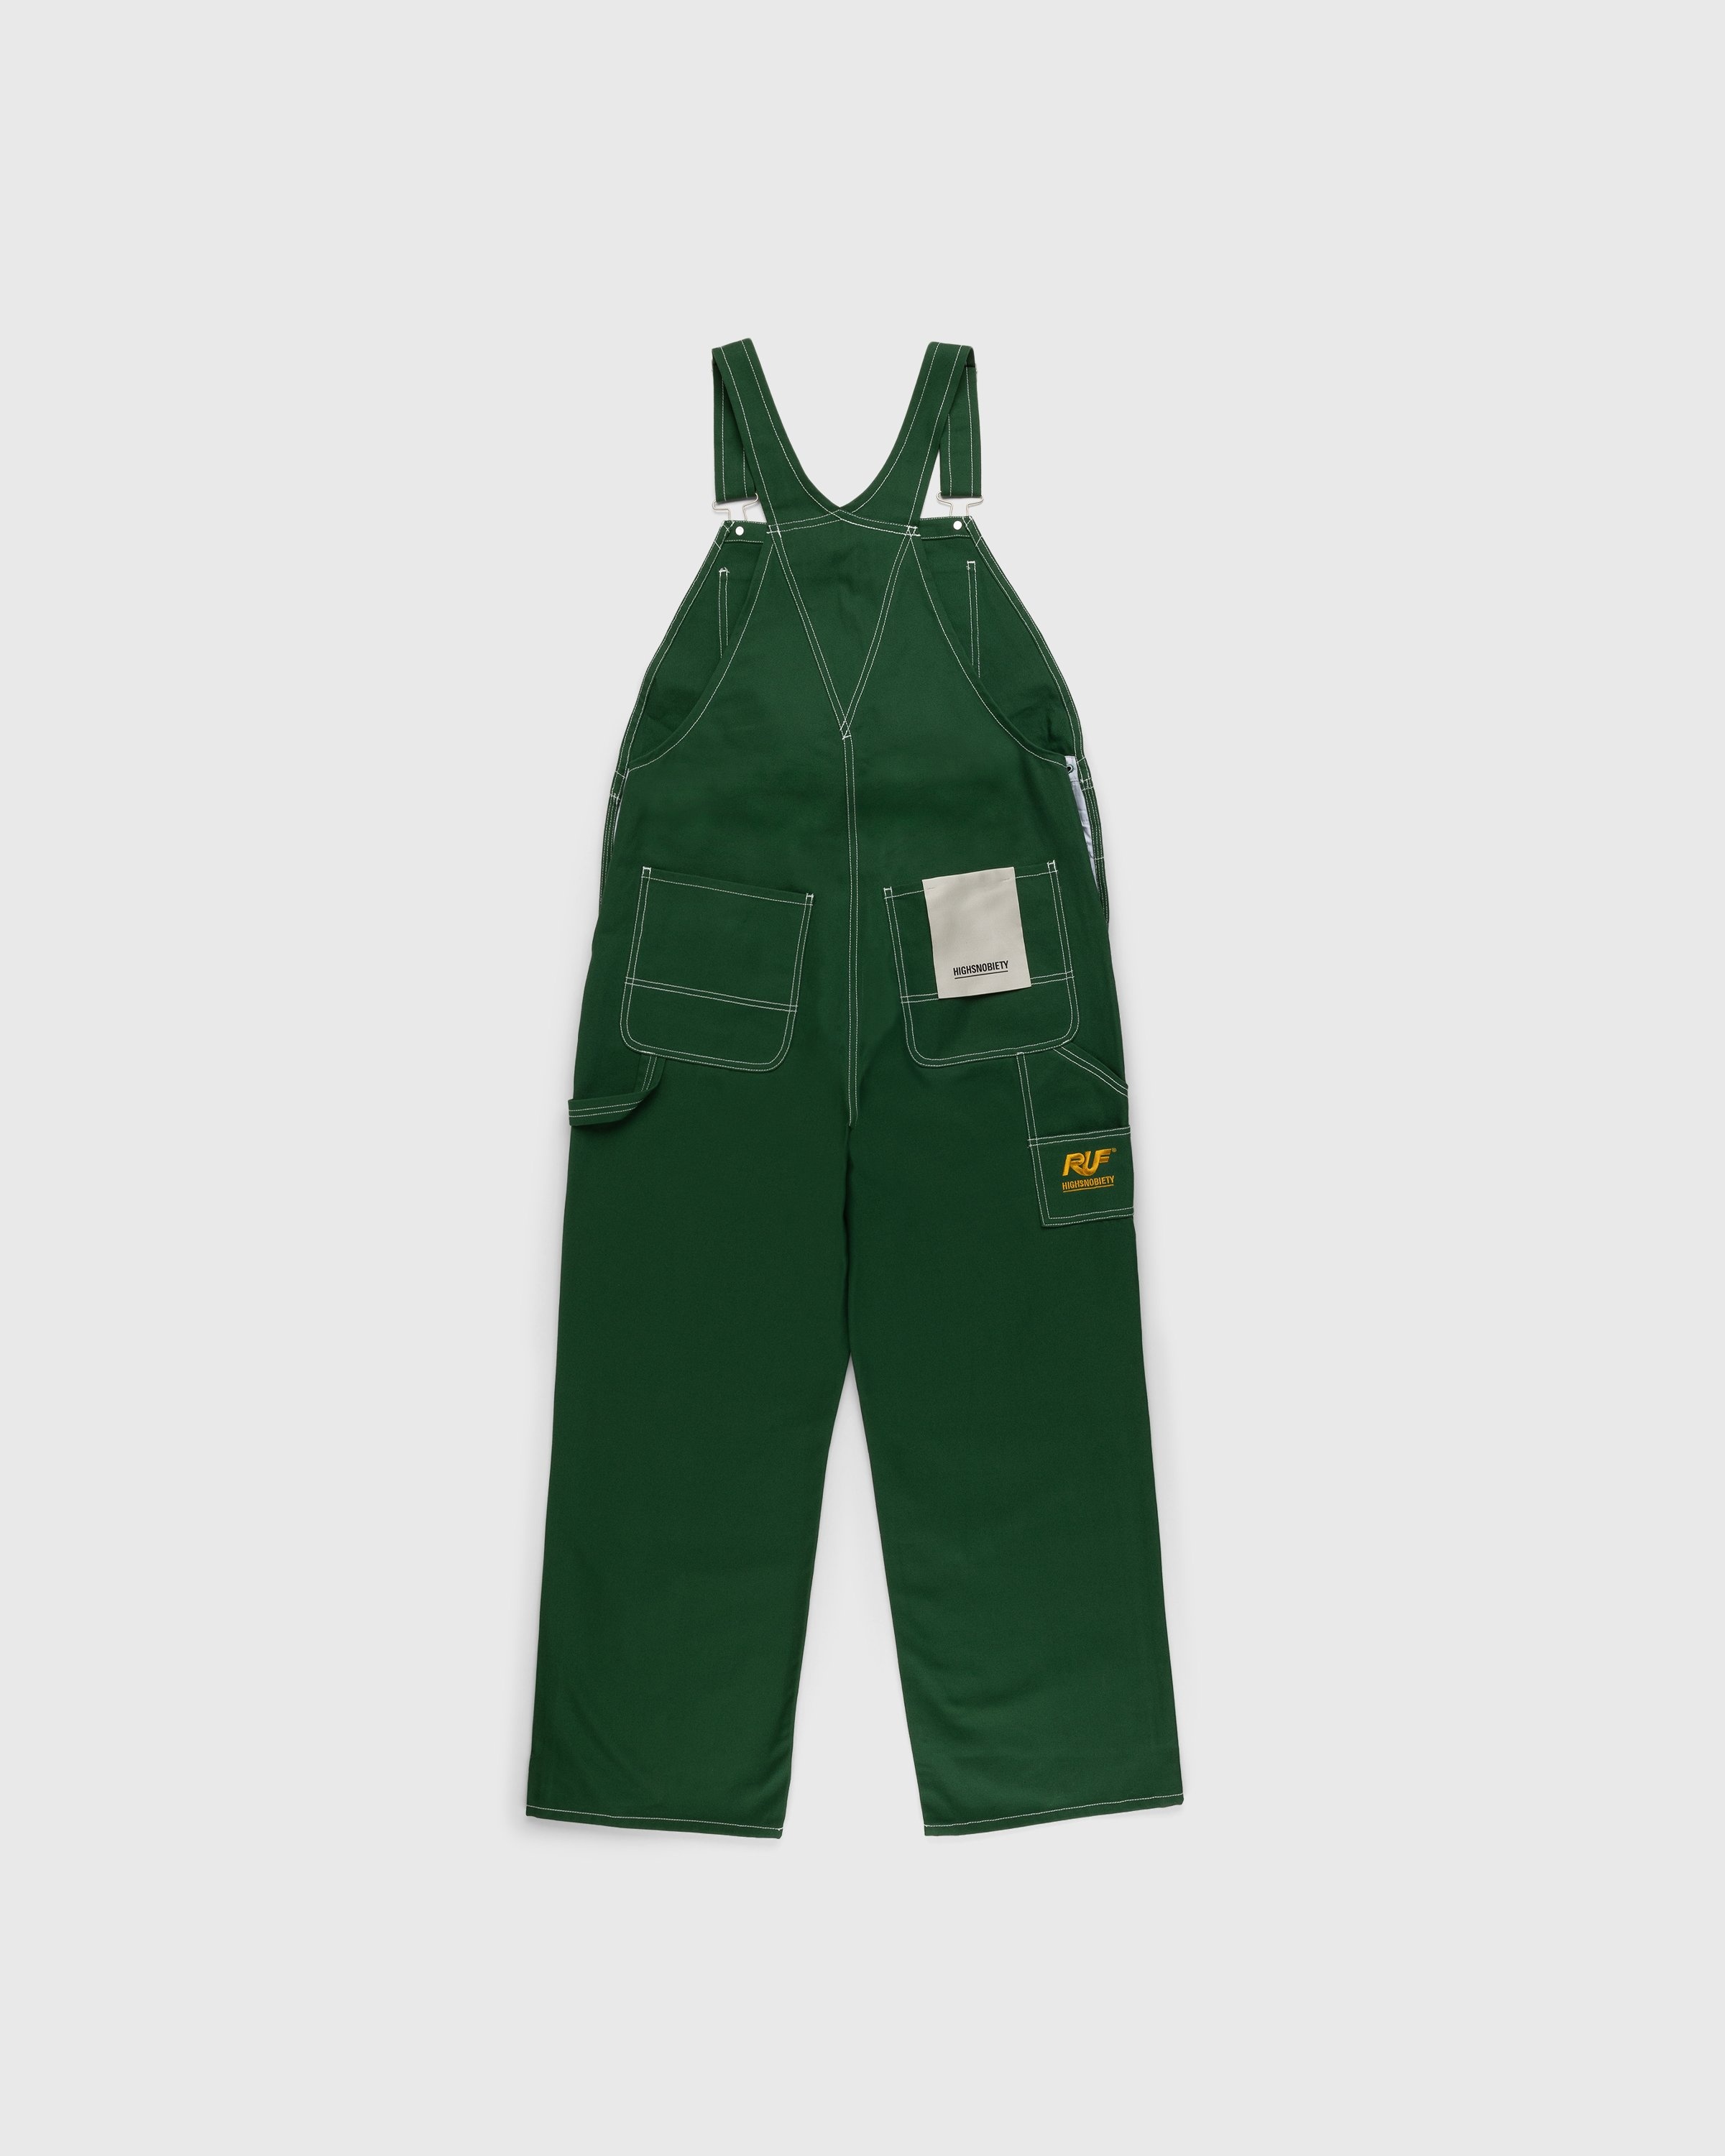 RUF x Highsnobiety – Cotton Overalls Green - Pants - Green - Image 1